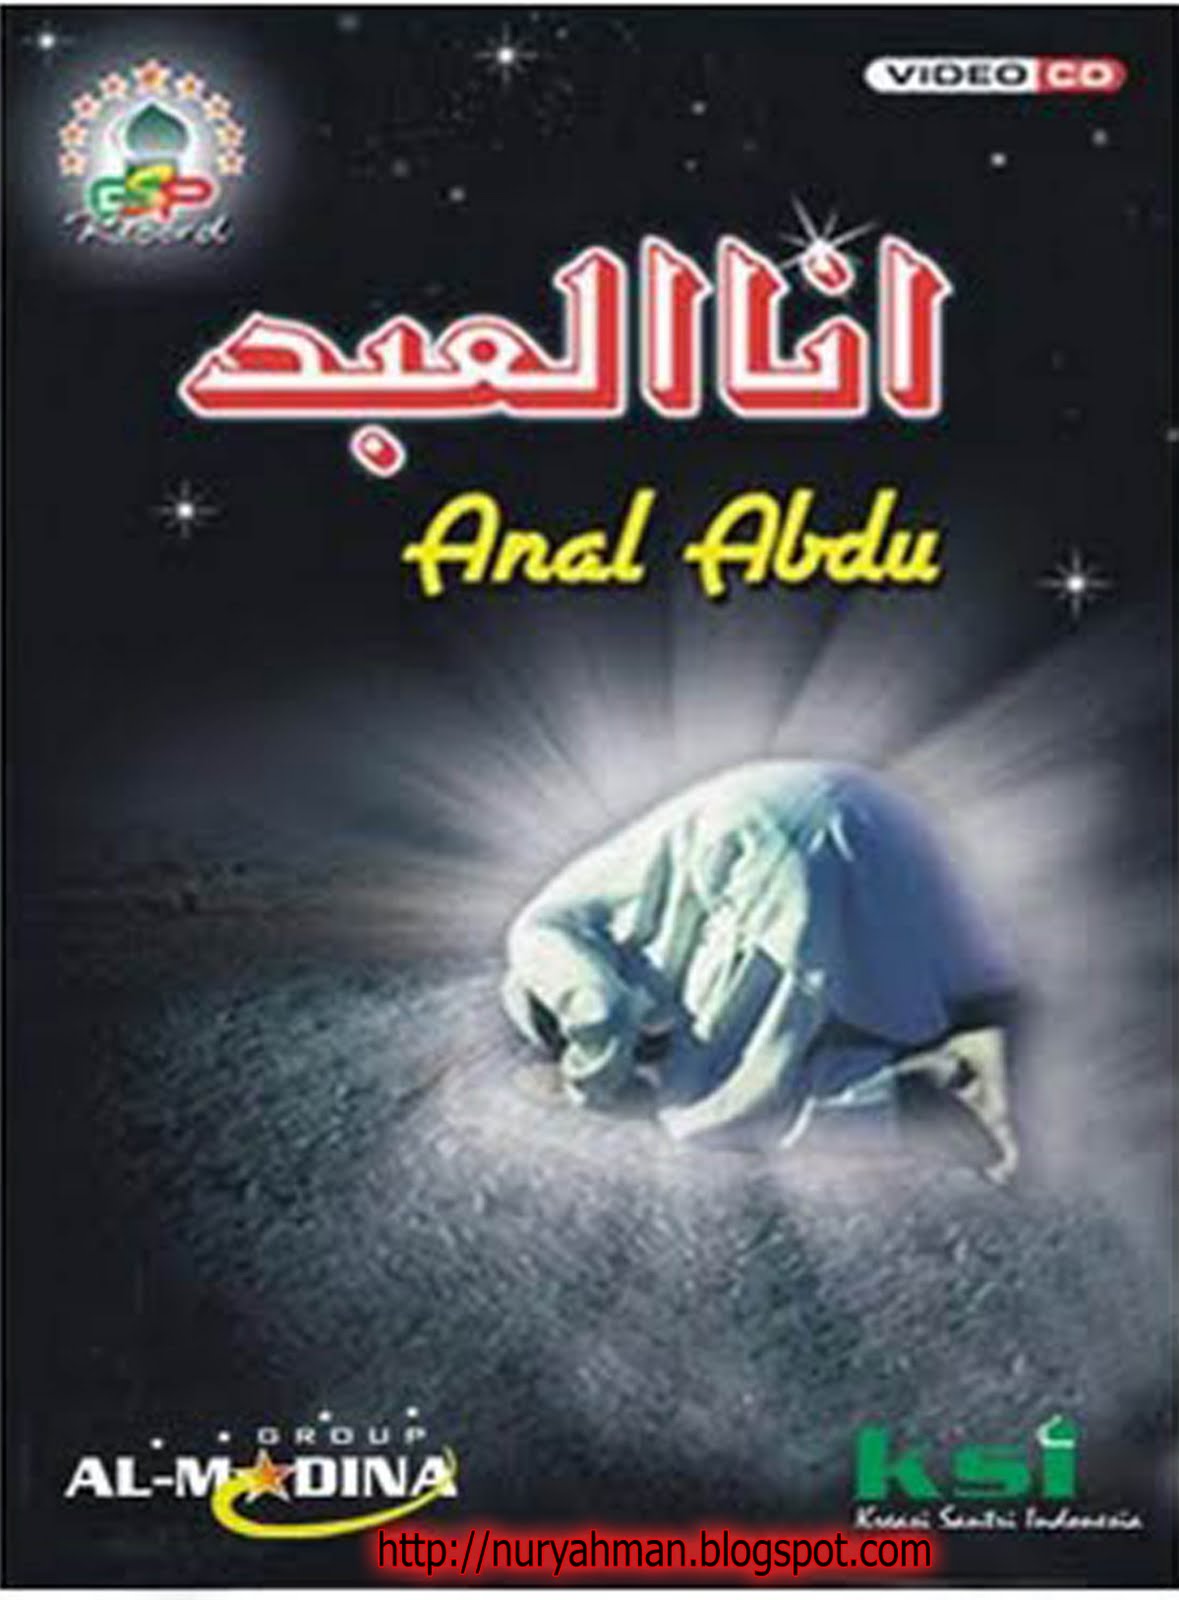 MP3 Al Madina Group-Album Ana Abdu